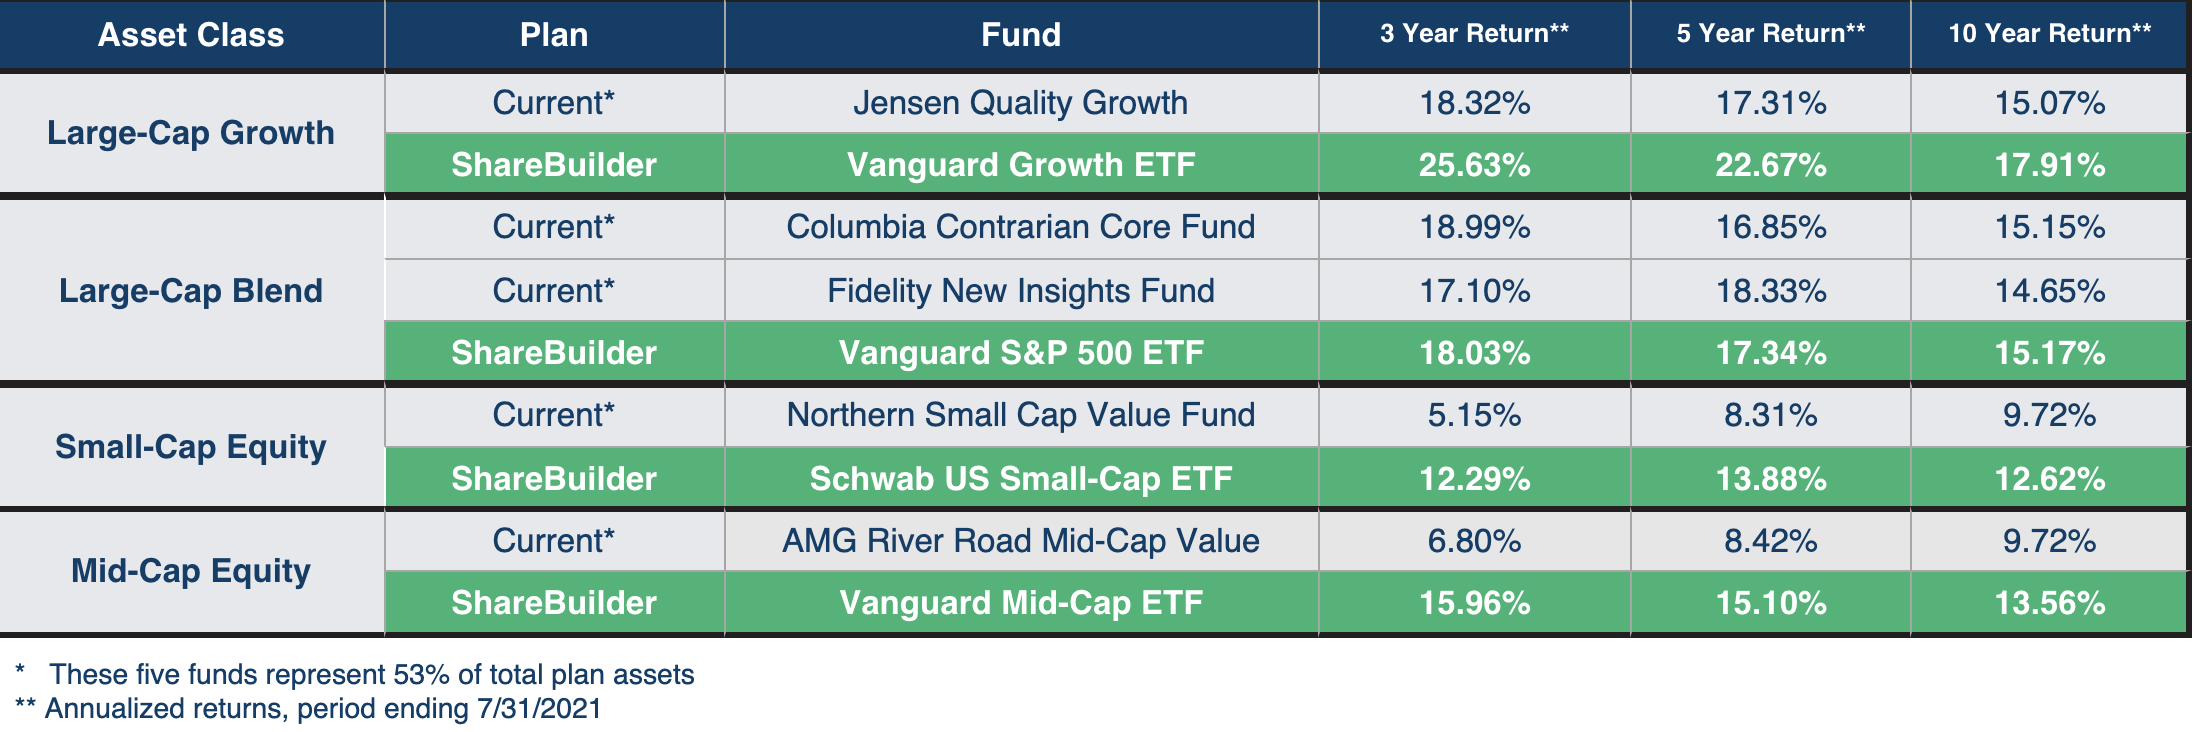 Fund Performance Comparison